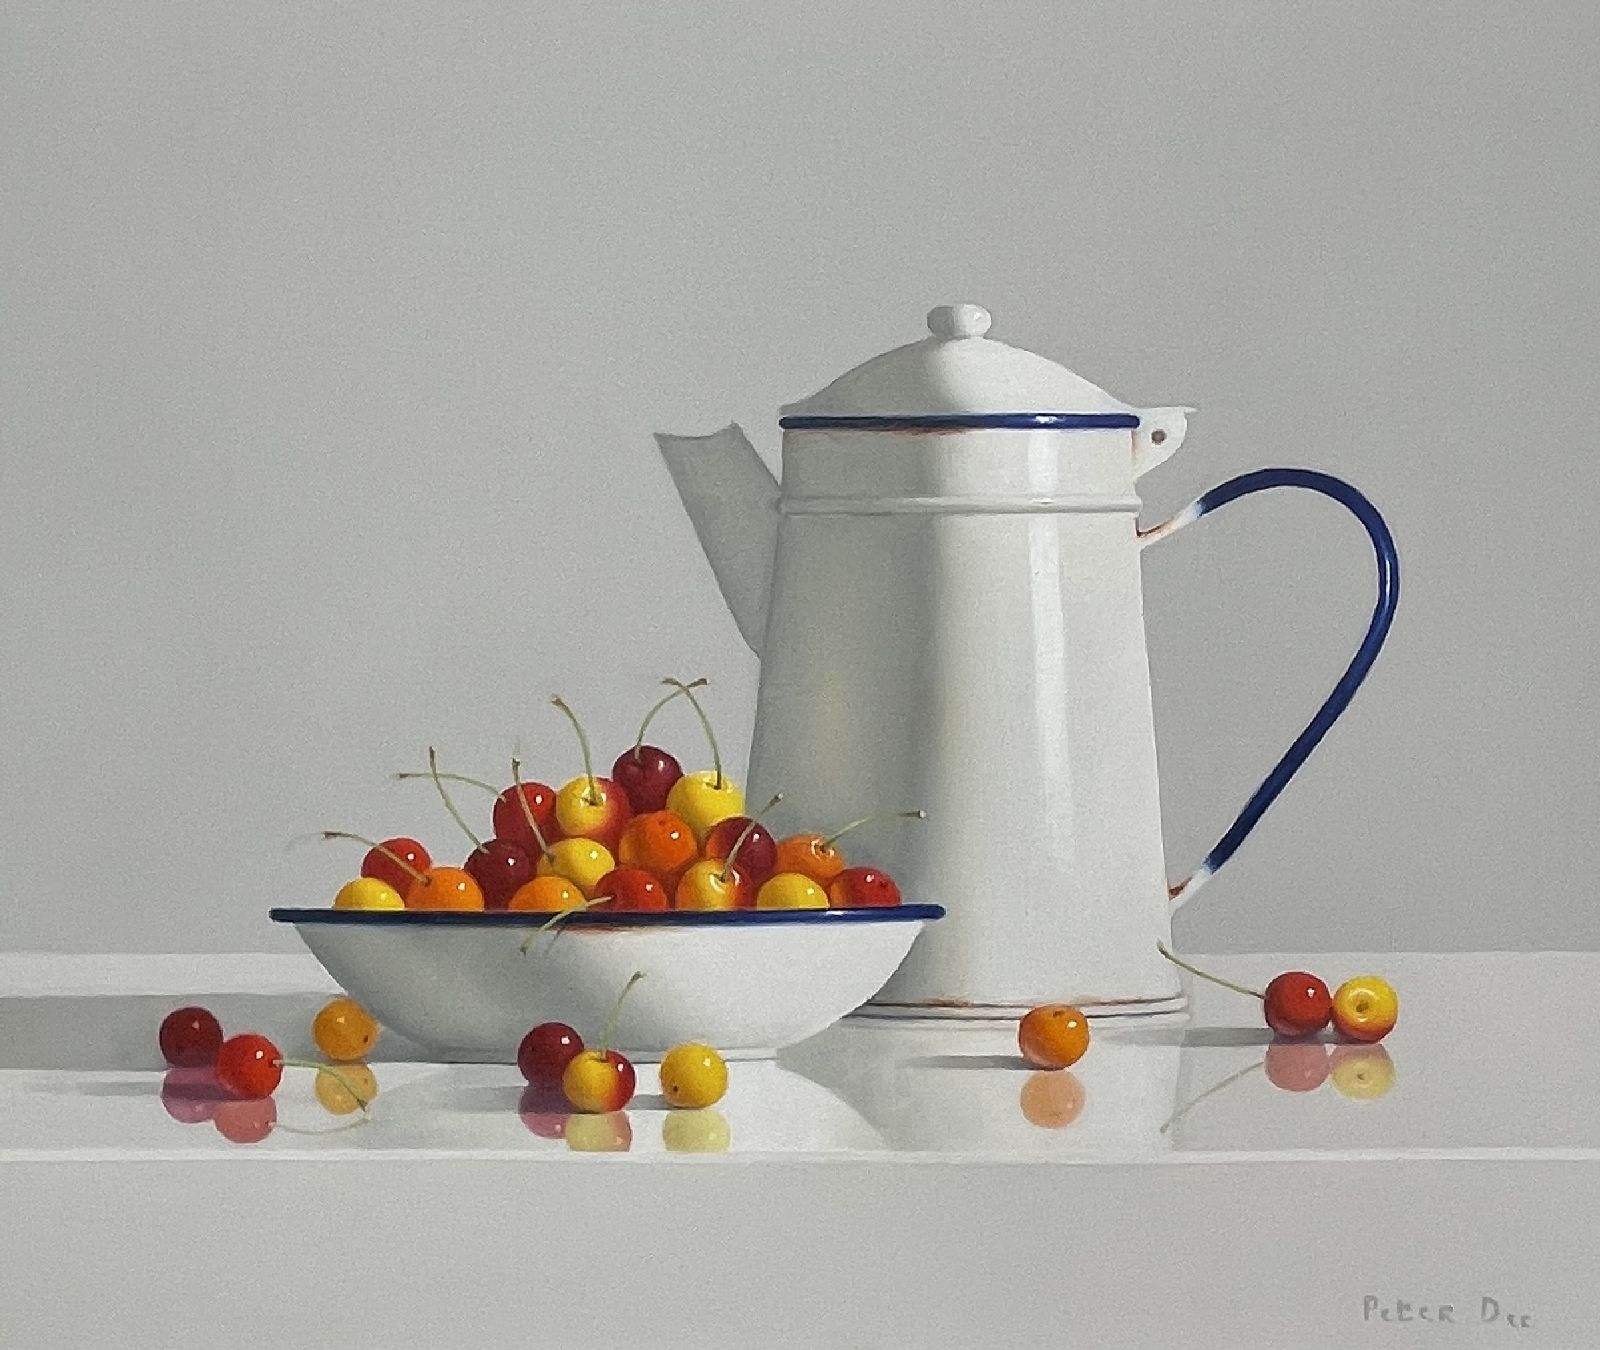 Peter Dee - White Vintage Enamelware Coffee Pot and Bowl with Rainier Cherries